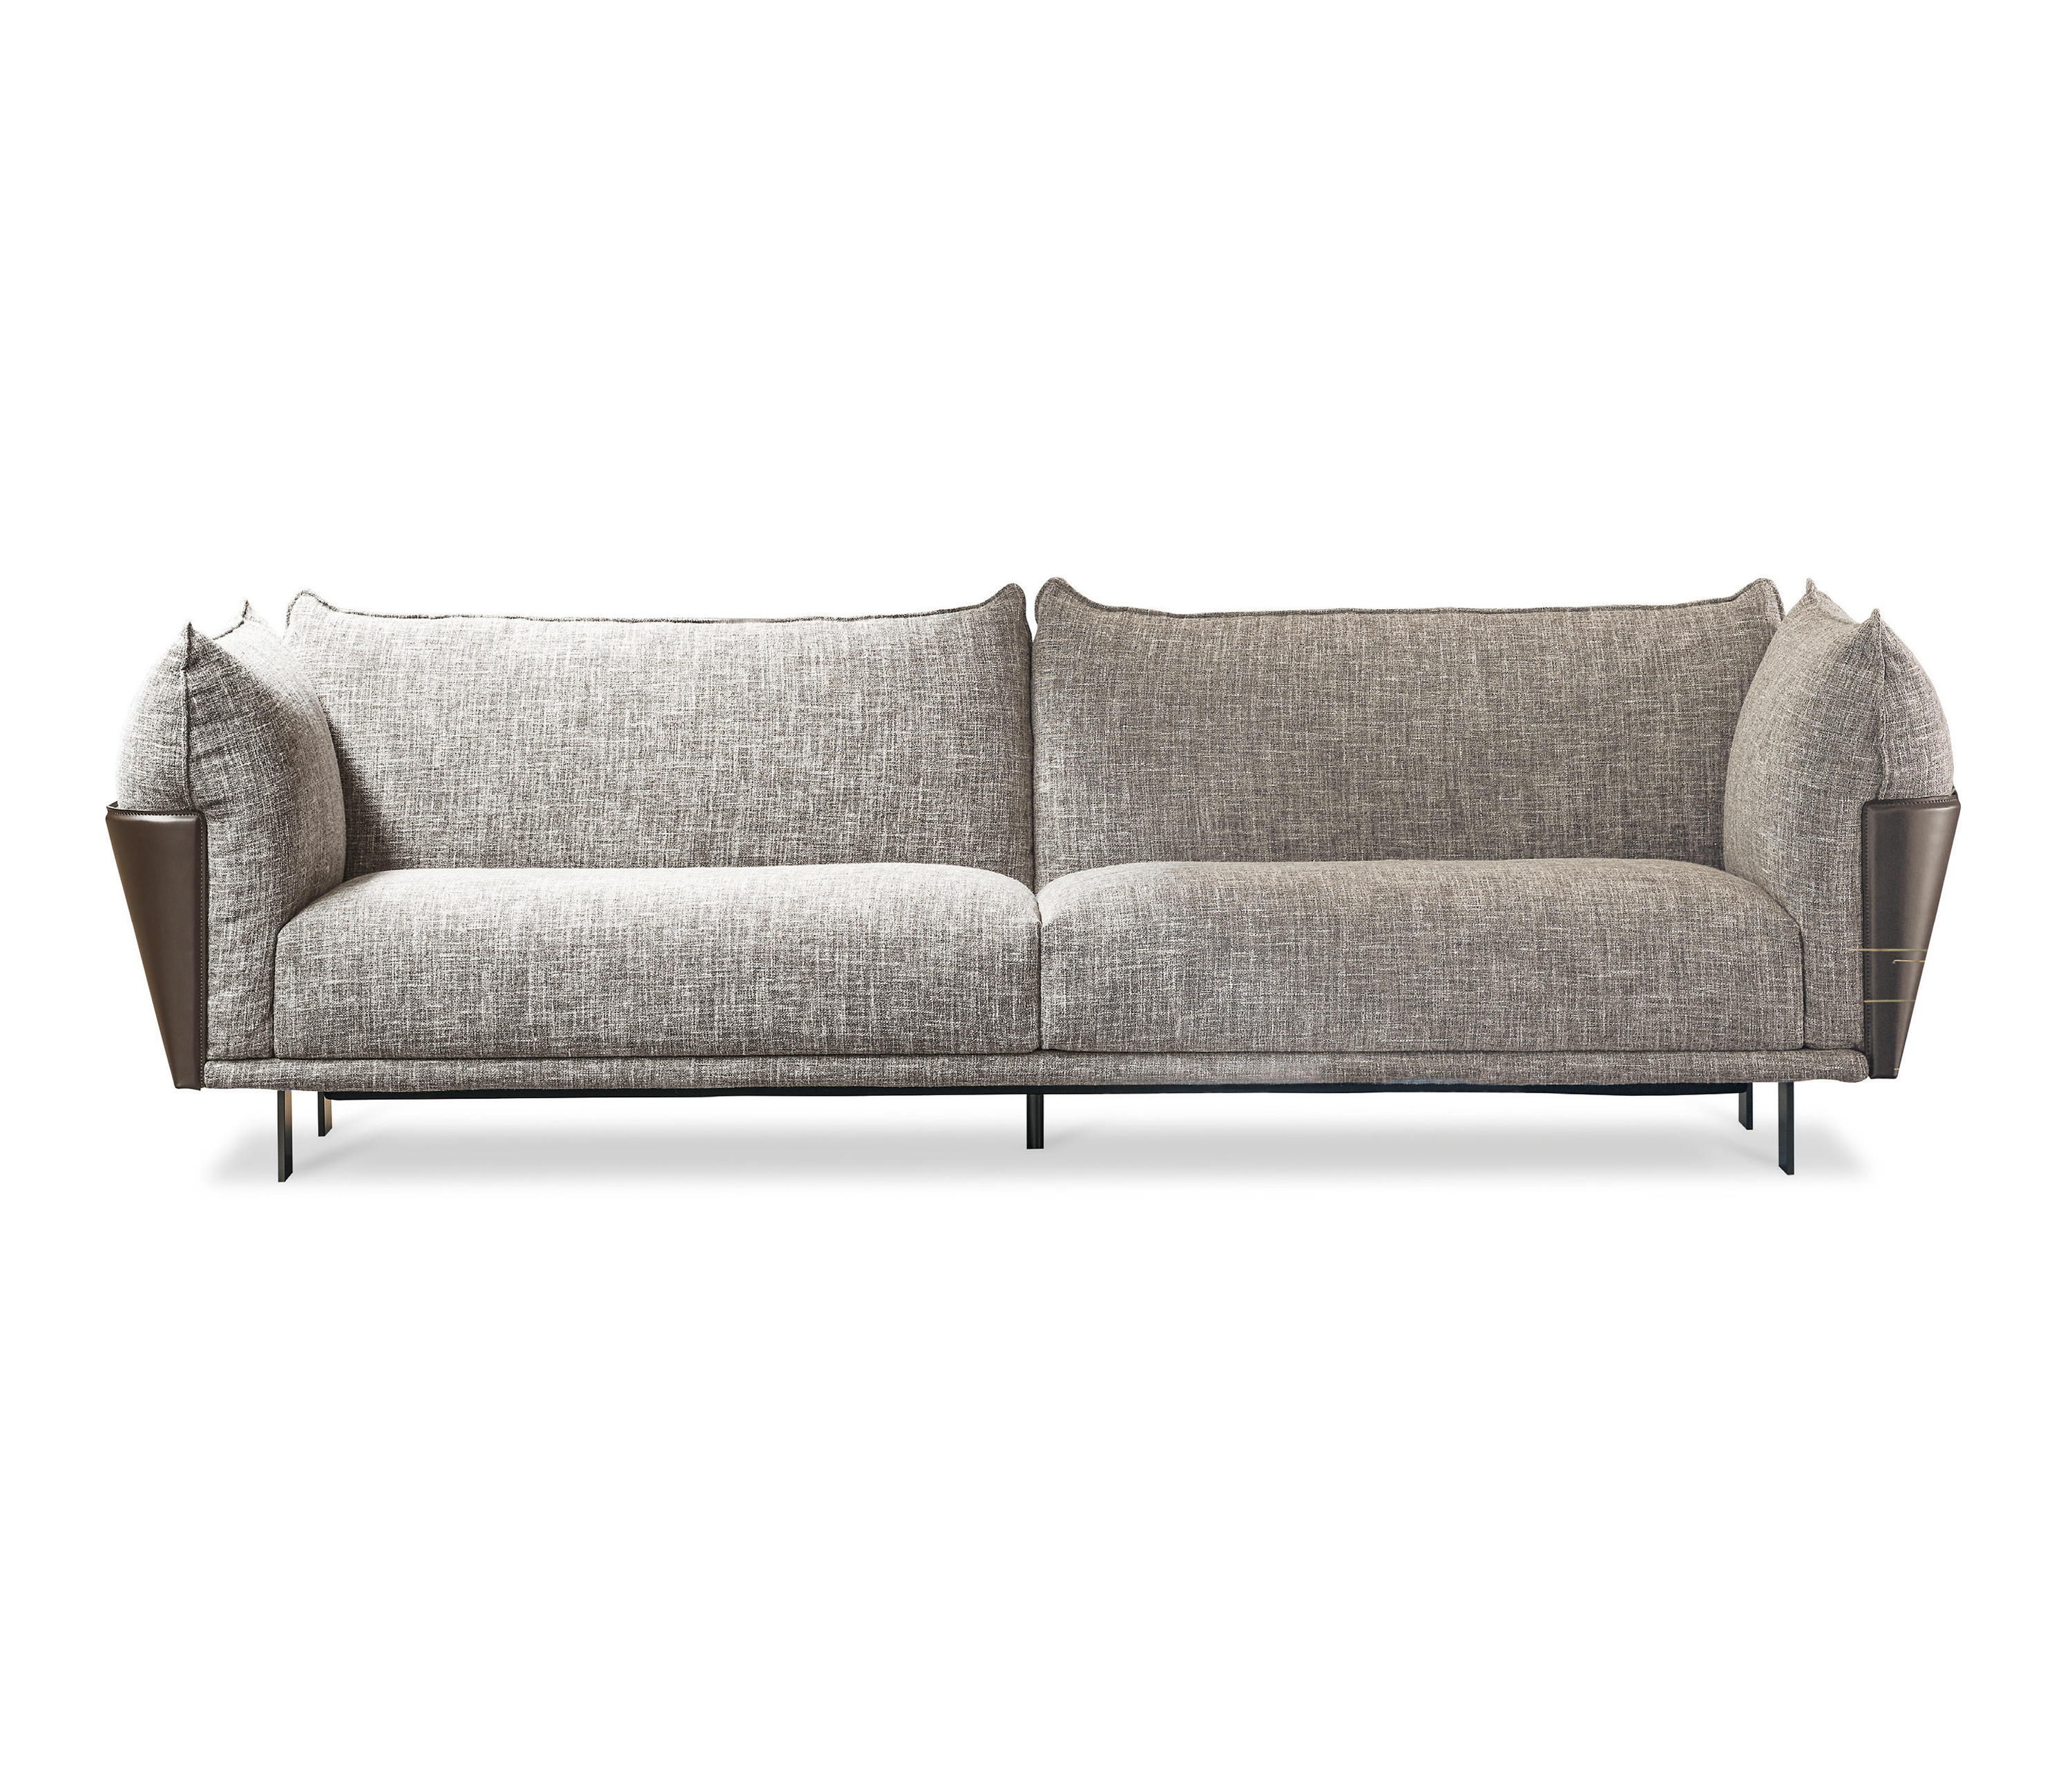 BLEND - Sofas from Bonaldo | Architonic